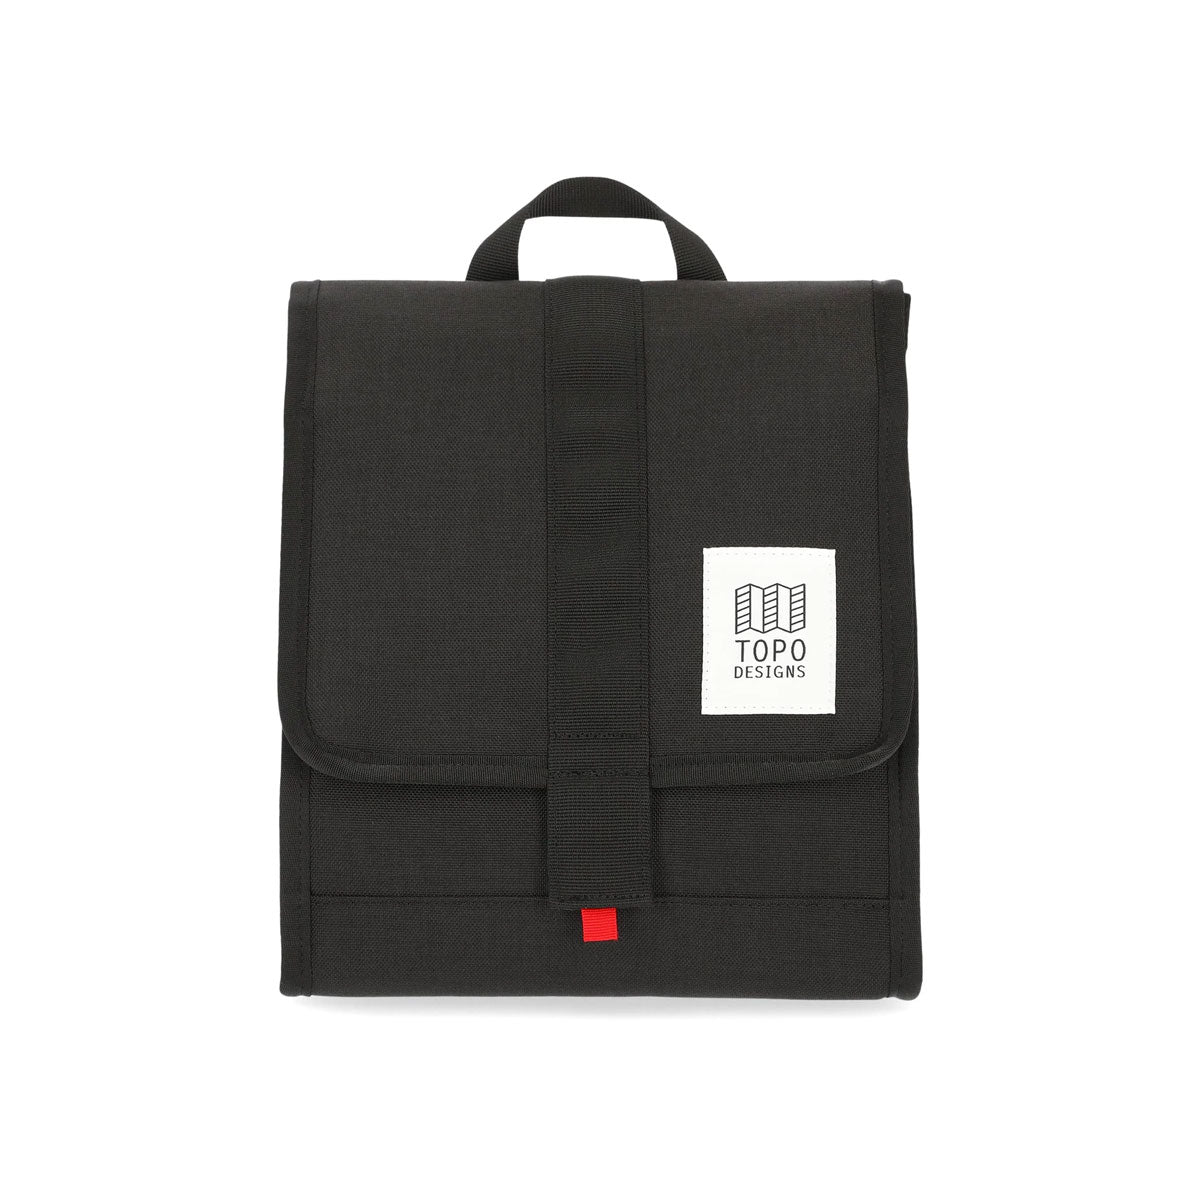 Topo Designs : Cooler Bag : Black